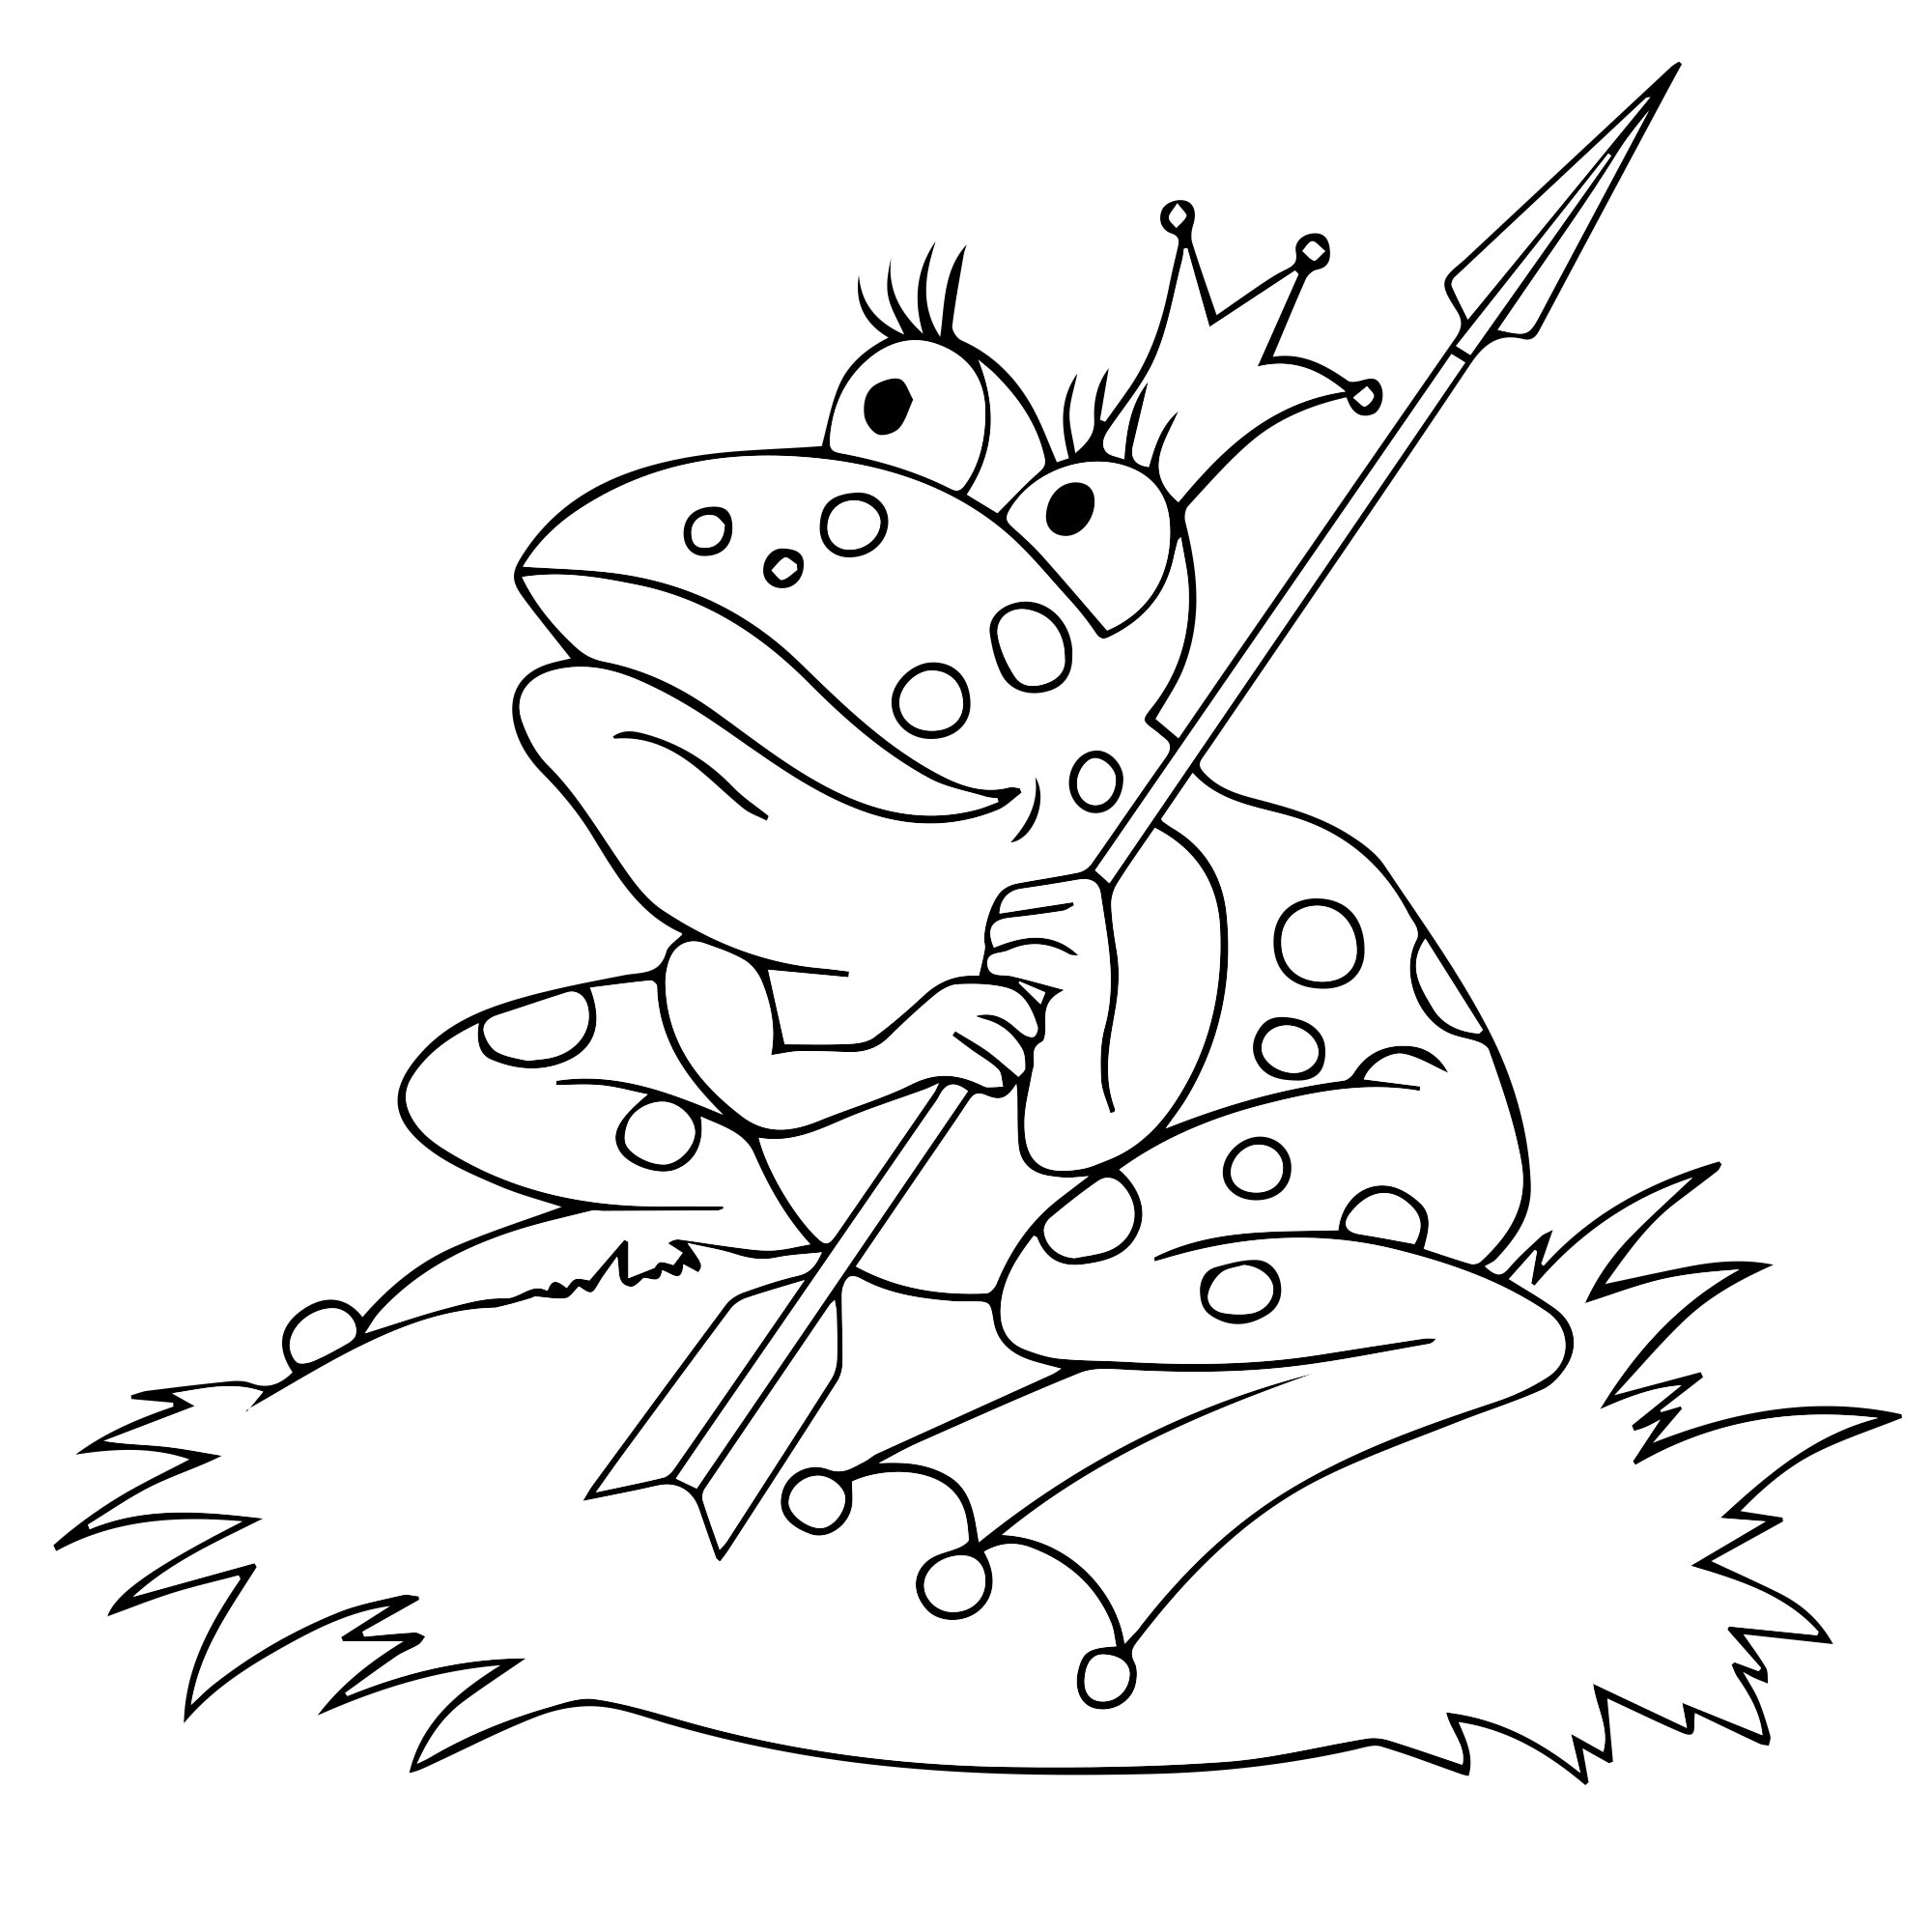 Раскраска по сказке Царевна лягушка для детей